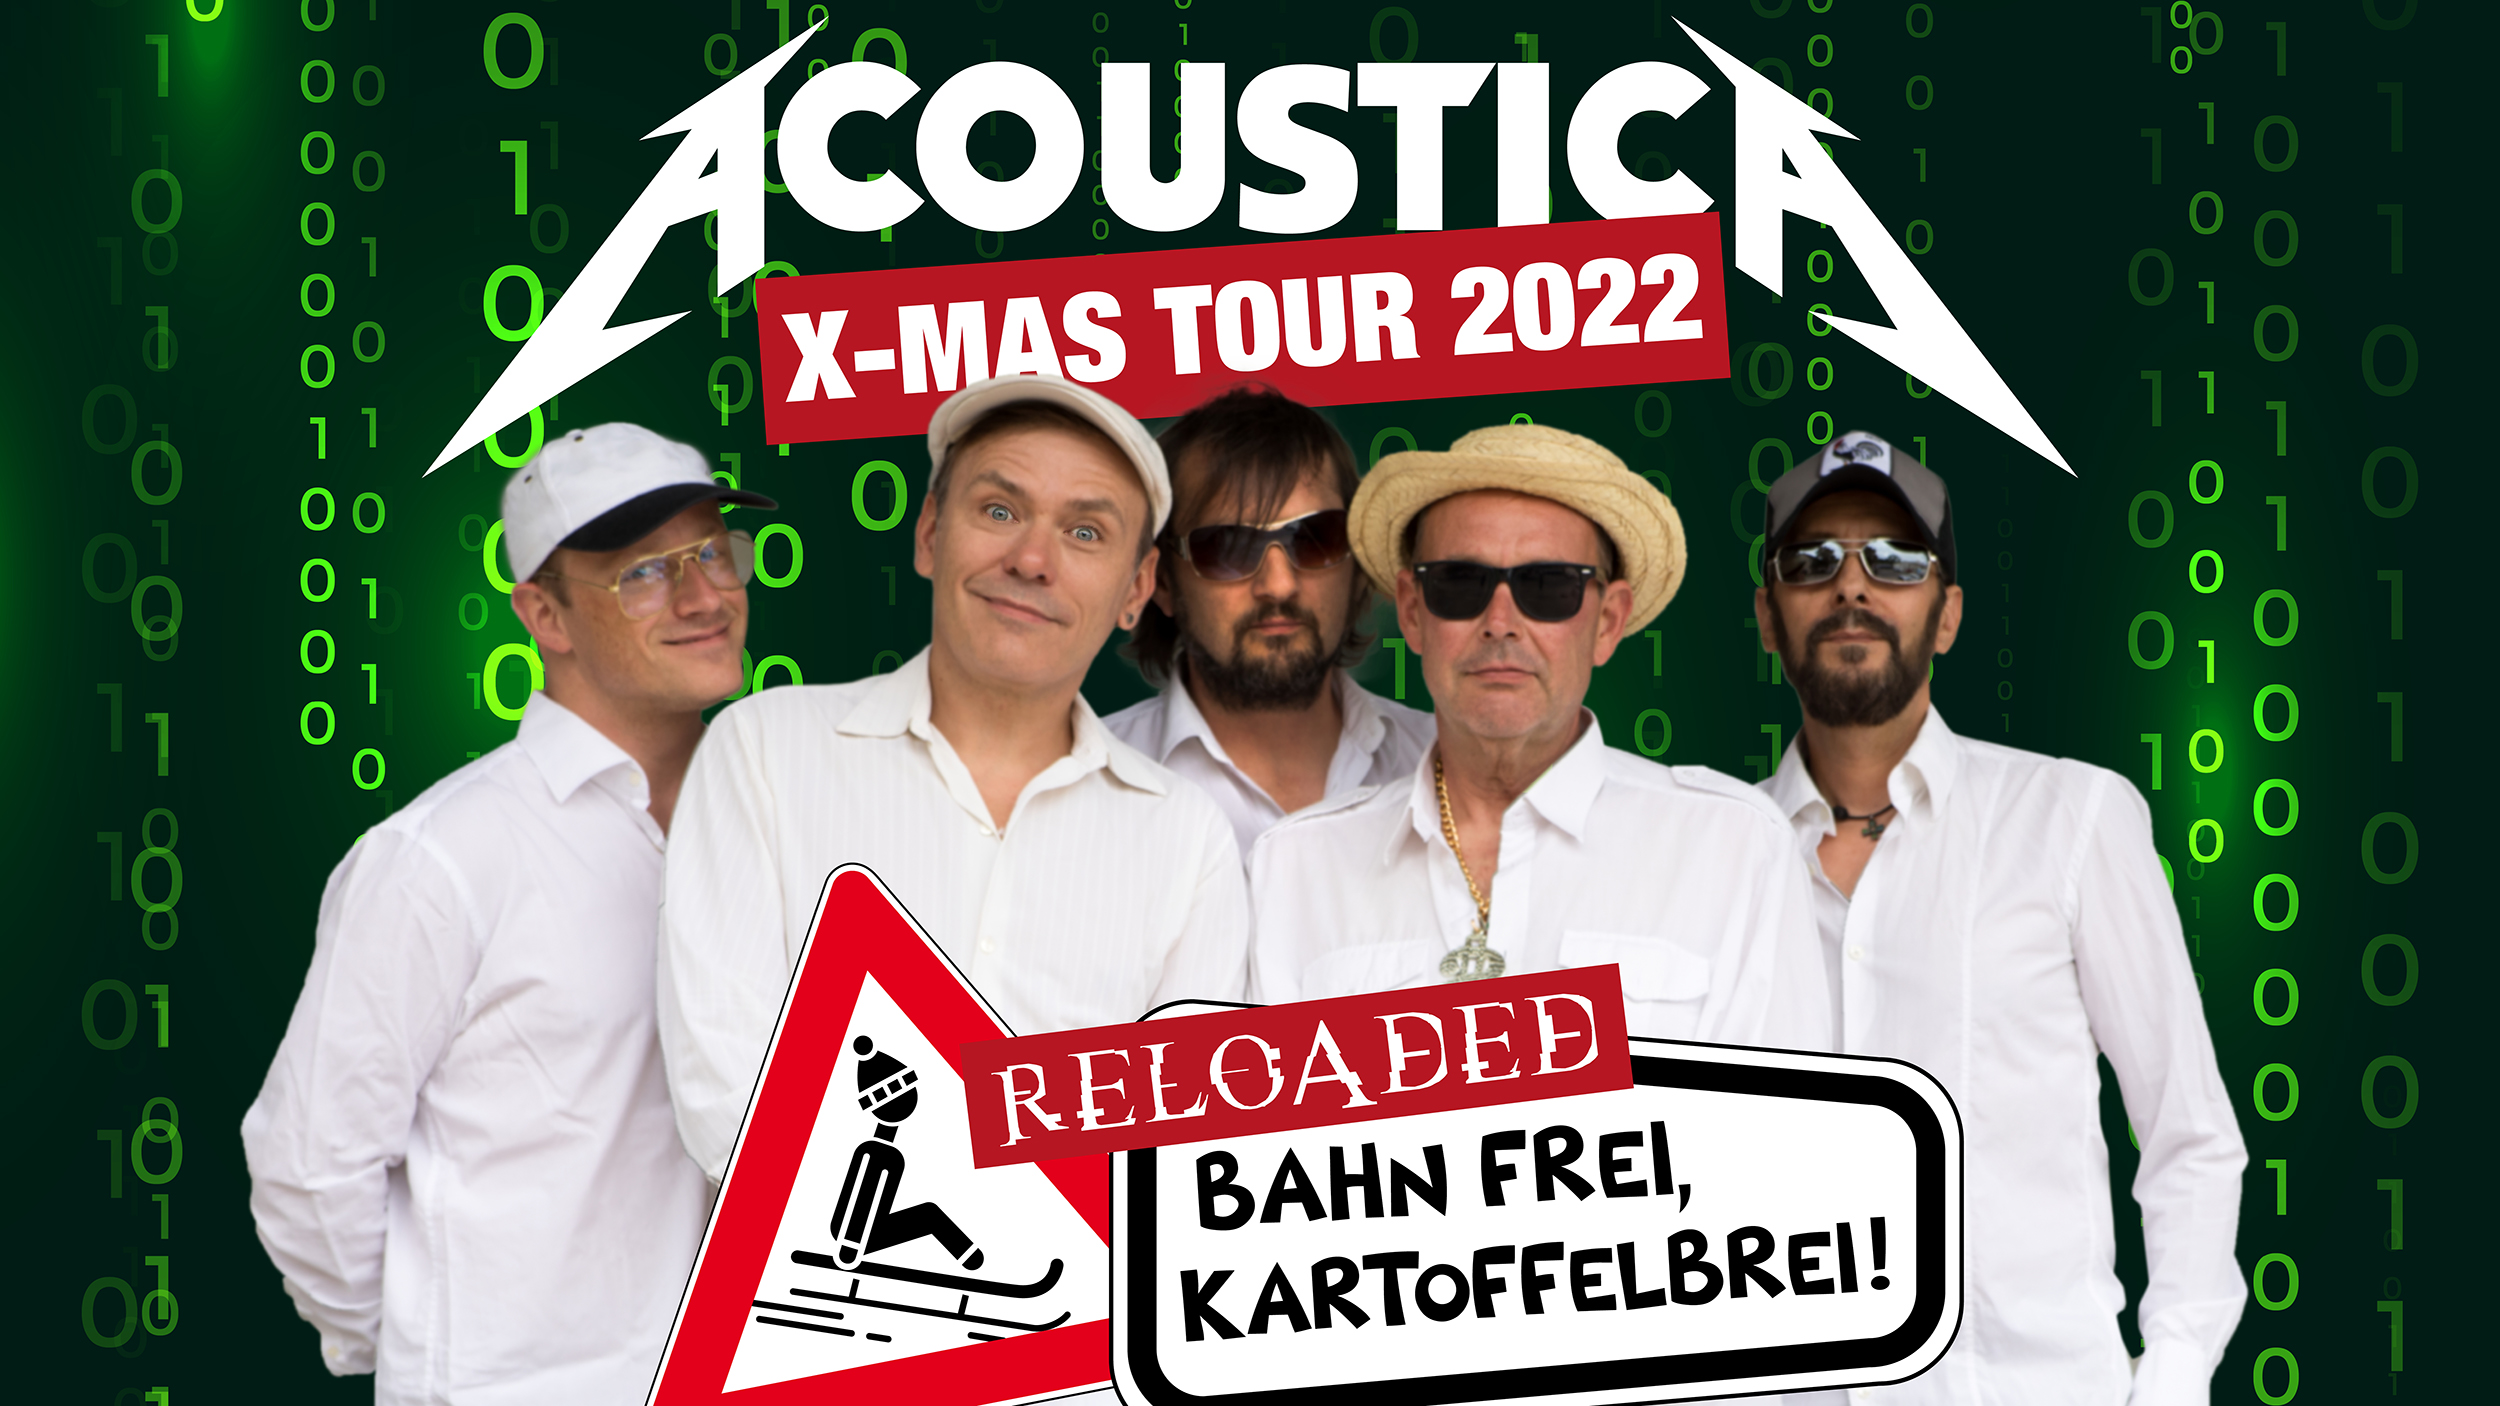 Acoustica: X-Mas Show 2022 Bahn frei, Kartoffelbrei - RELOADED